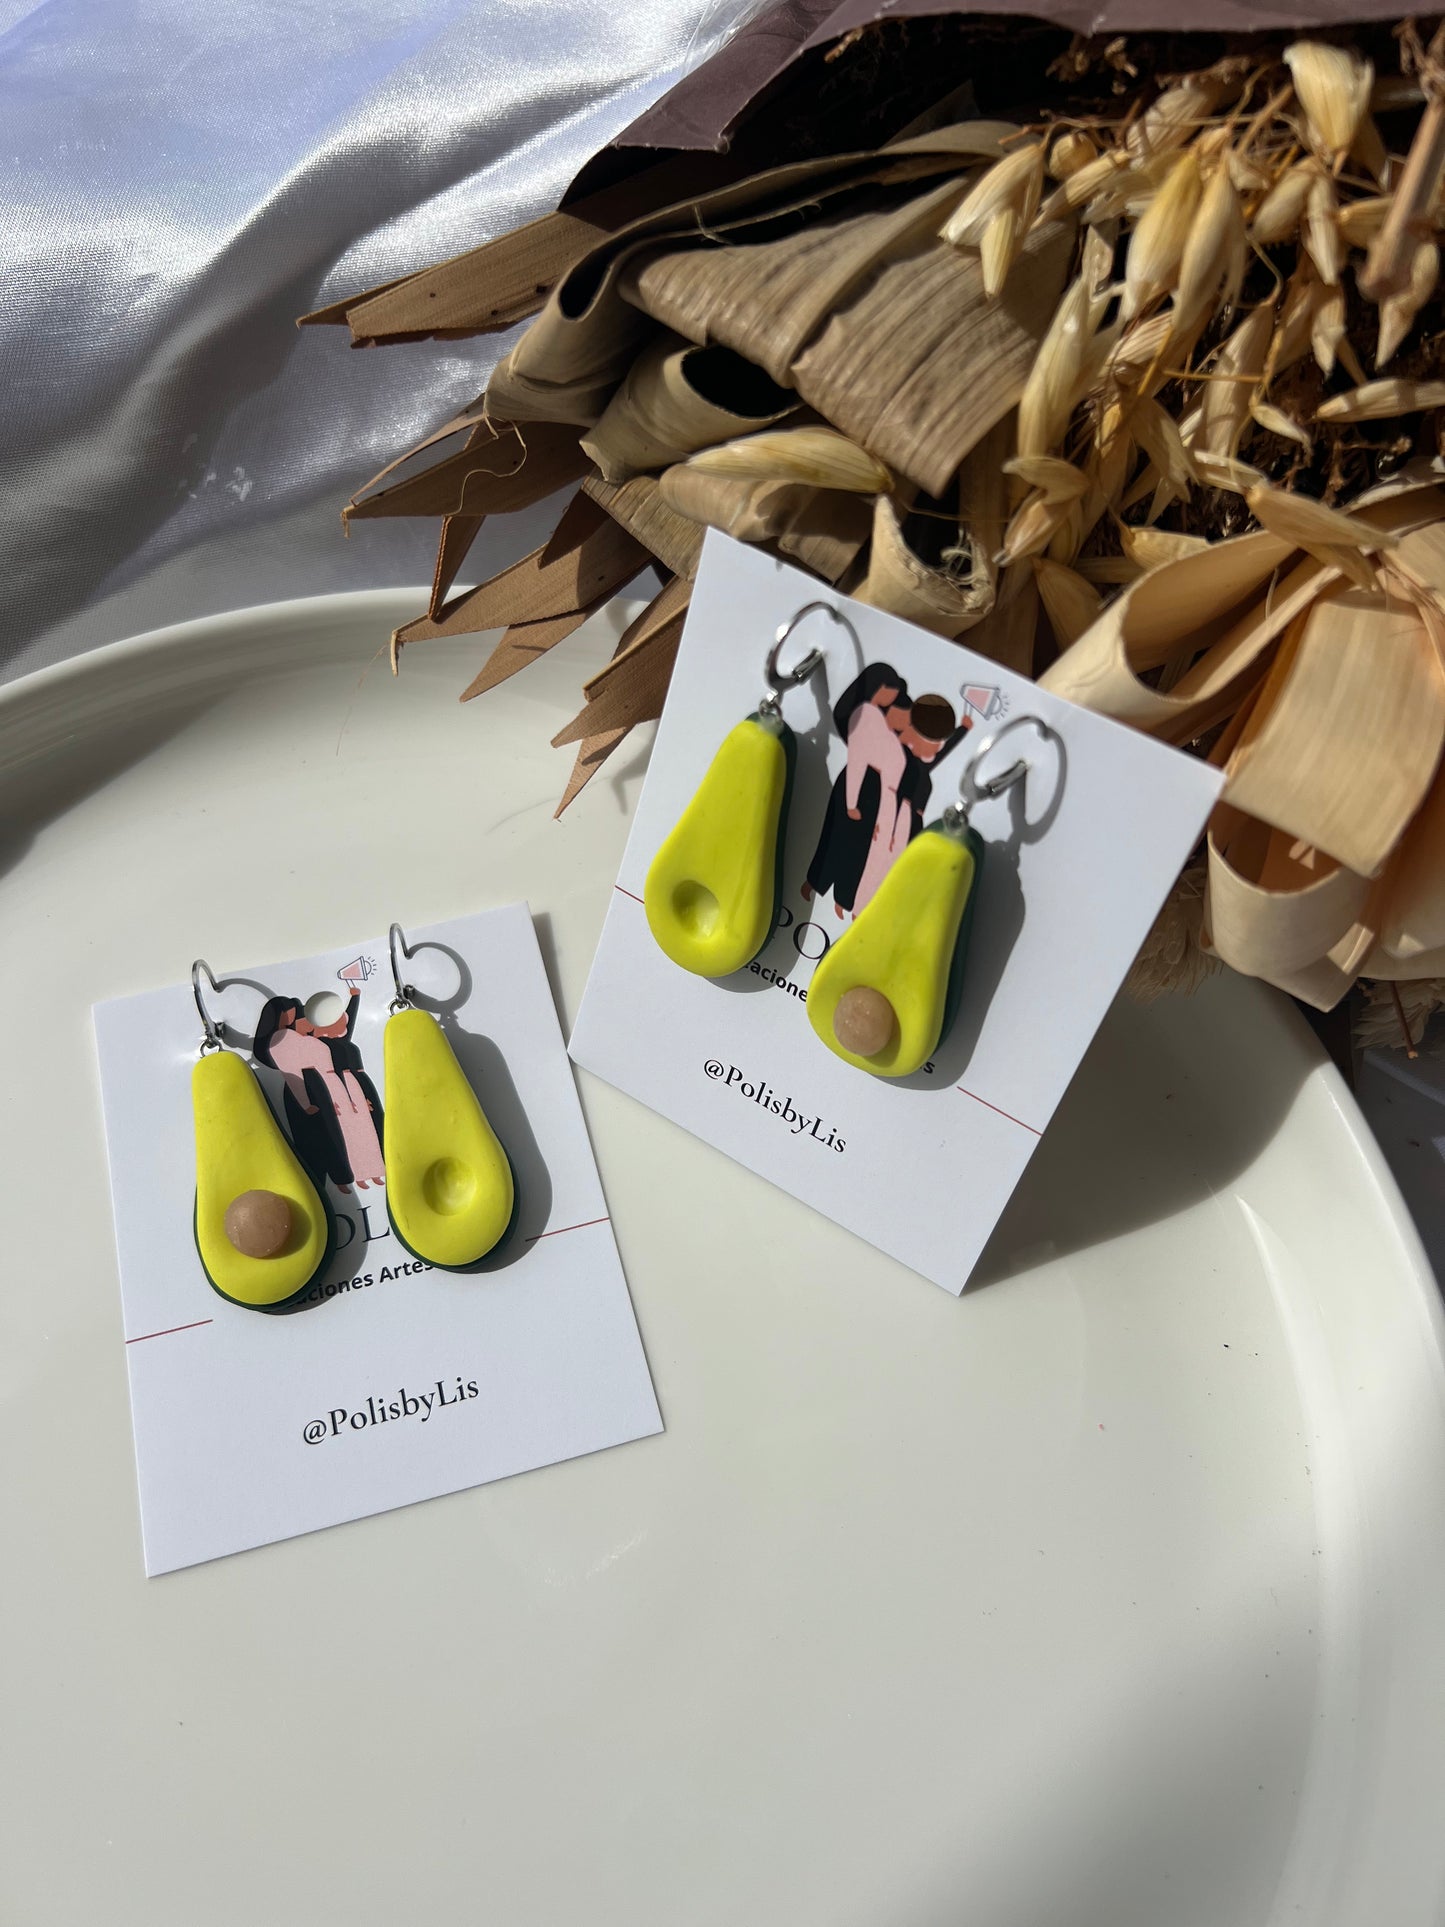 Avocado earrings